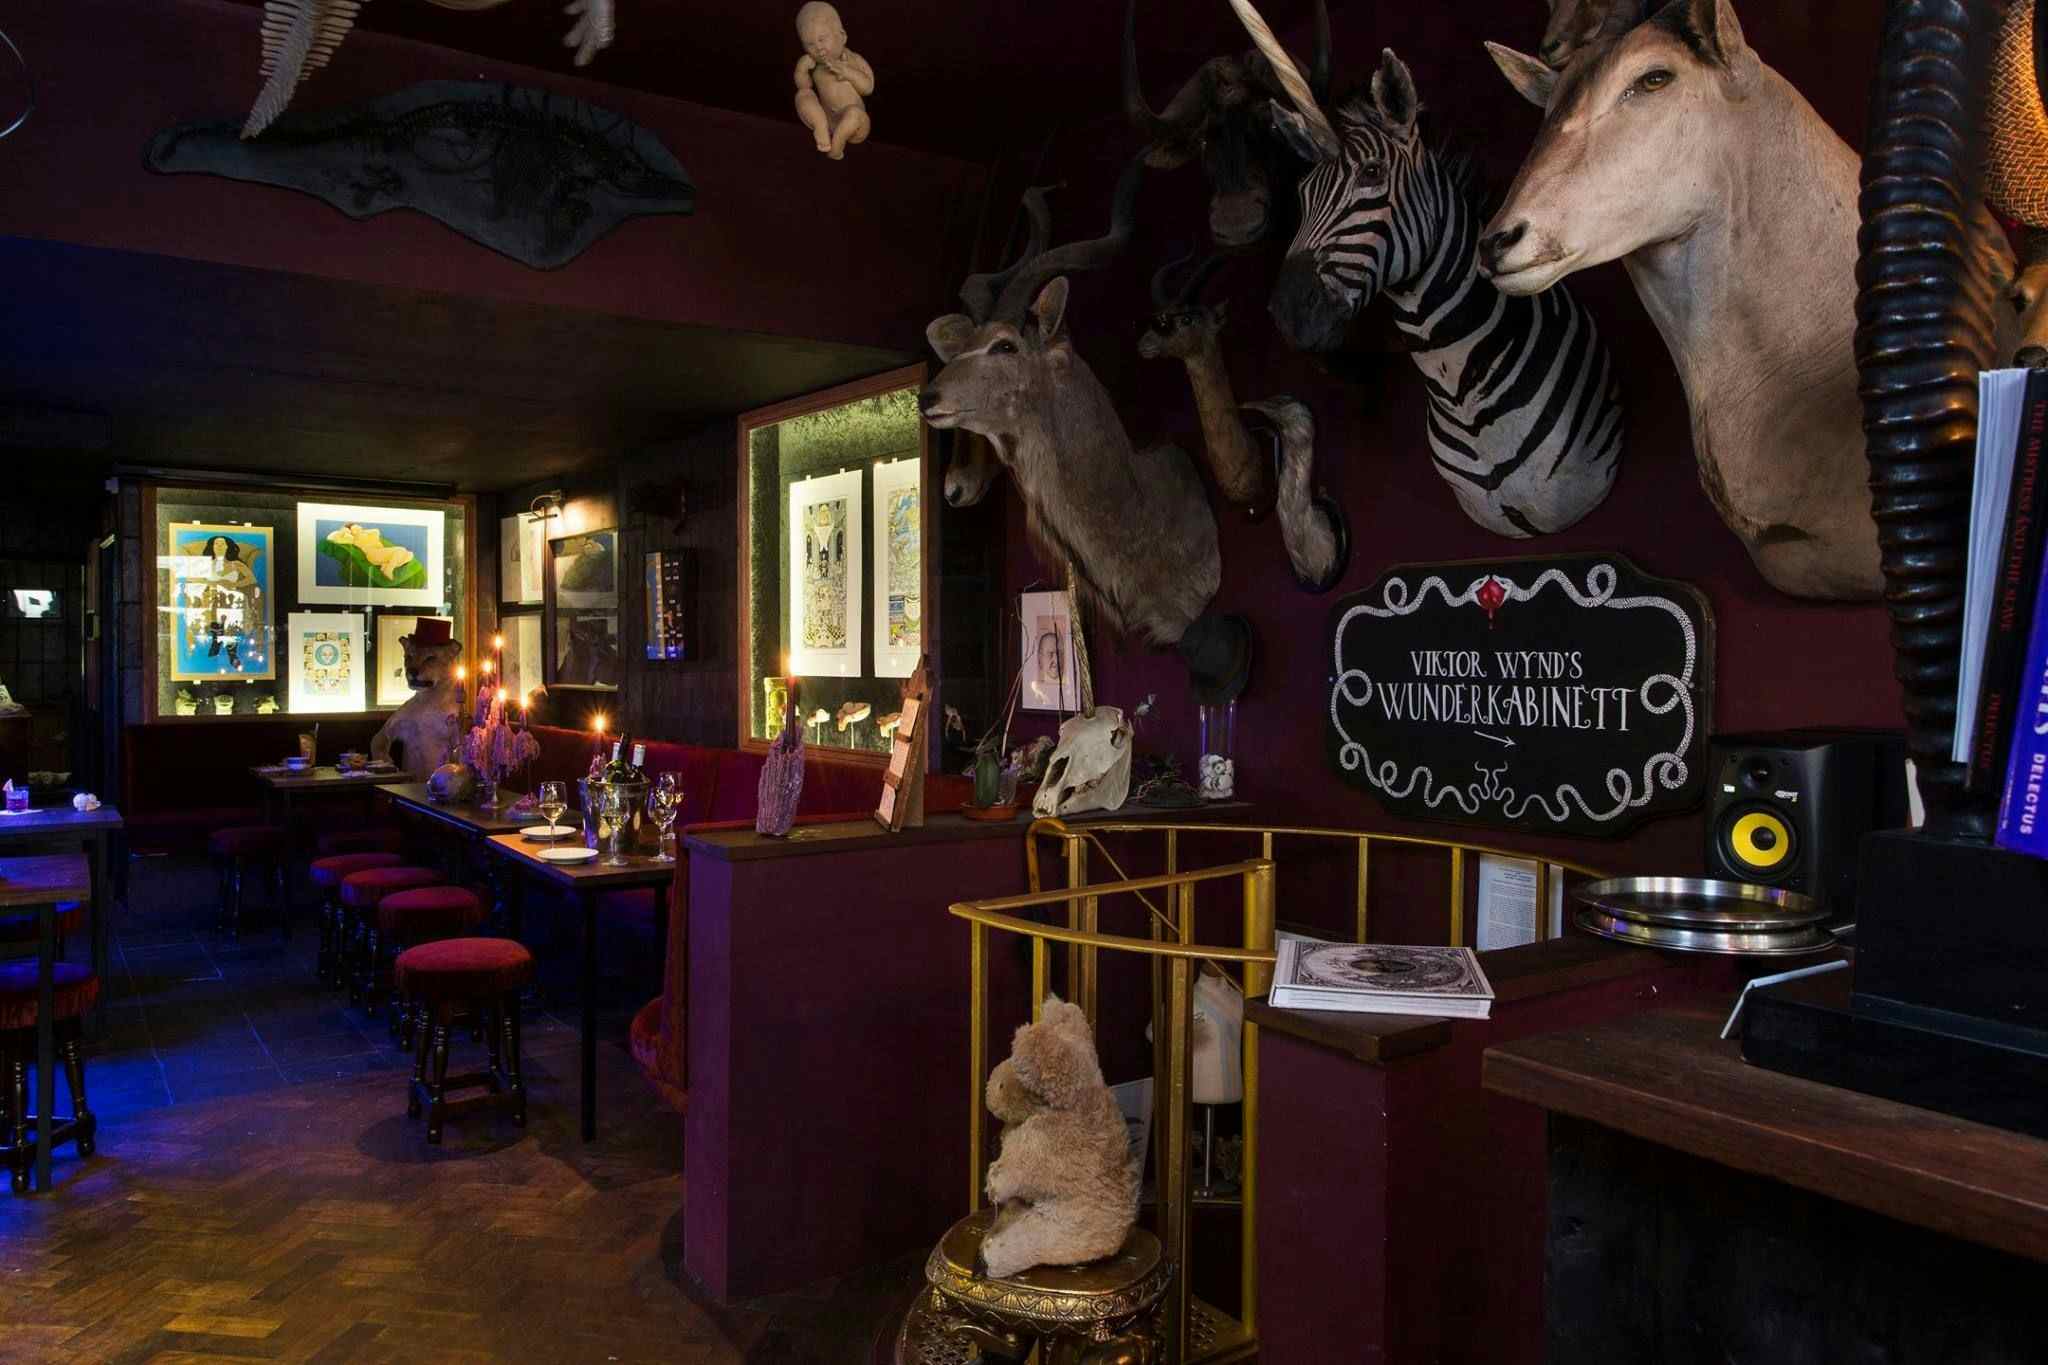 East London's Most Curious Cocktail Bar, The Last Tuesday Society & Viktor Wynd Museum of Curiosities